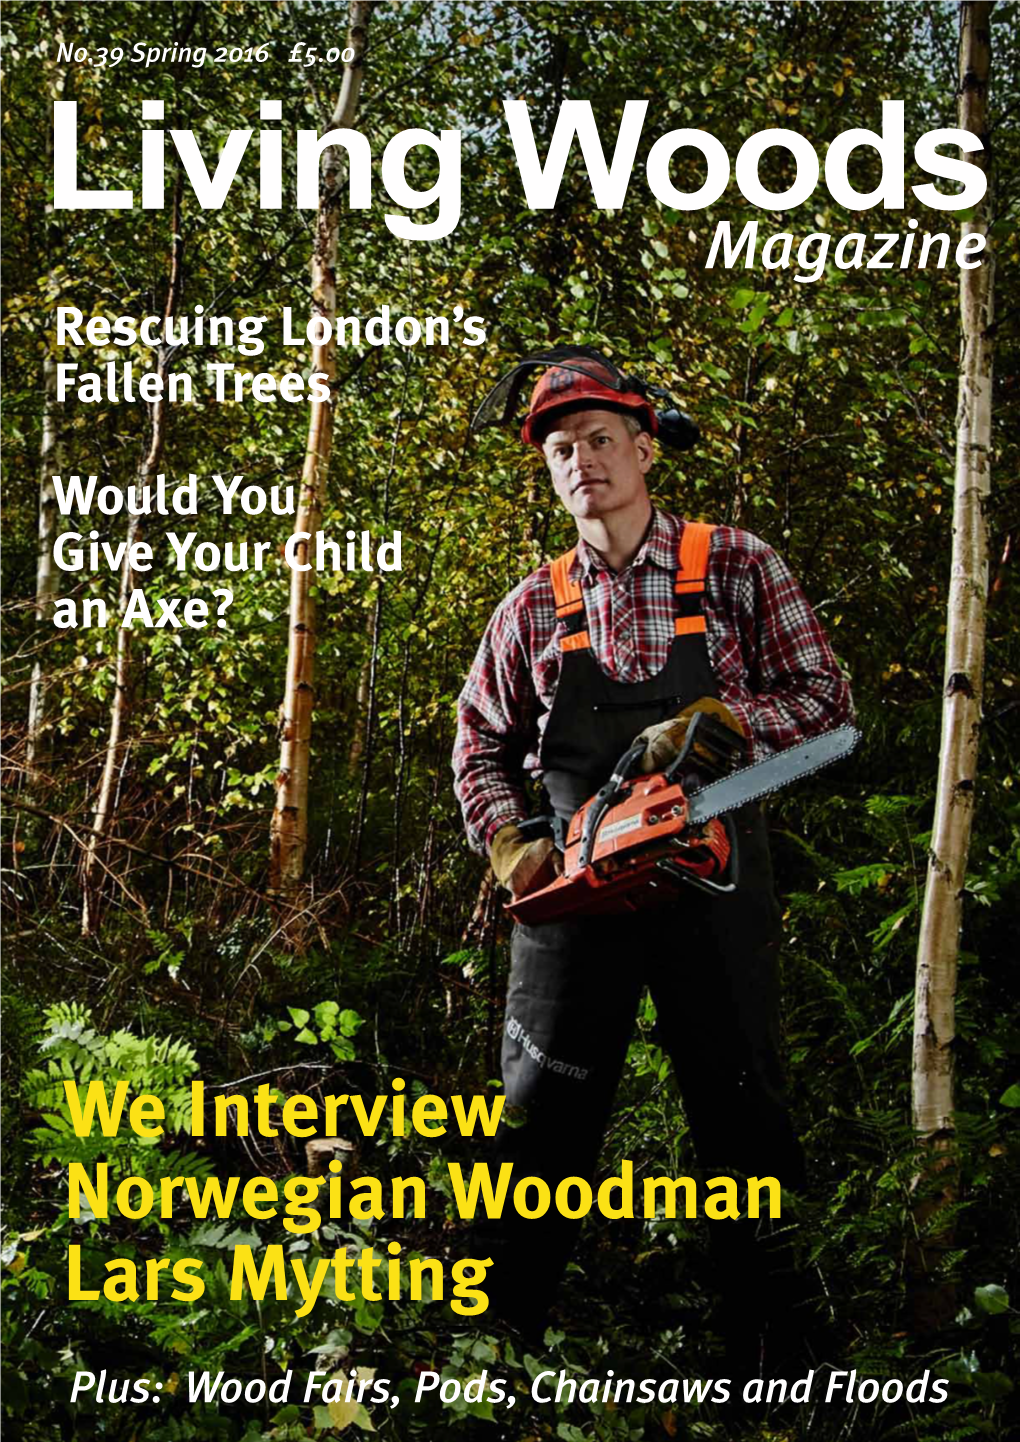 We Interview Norwegian Woodman Lars Mytting